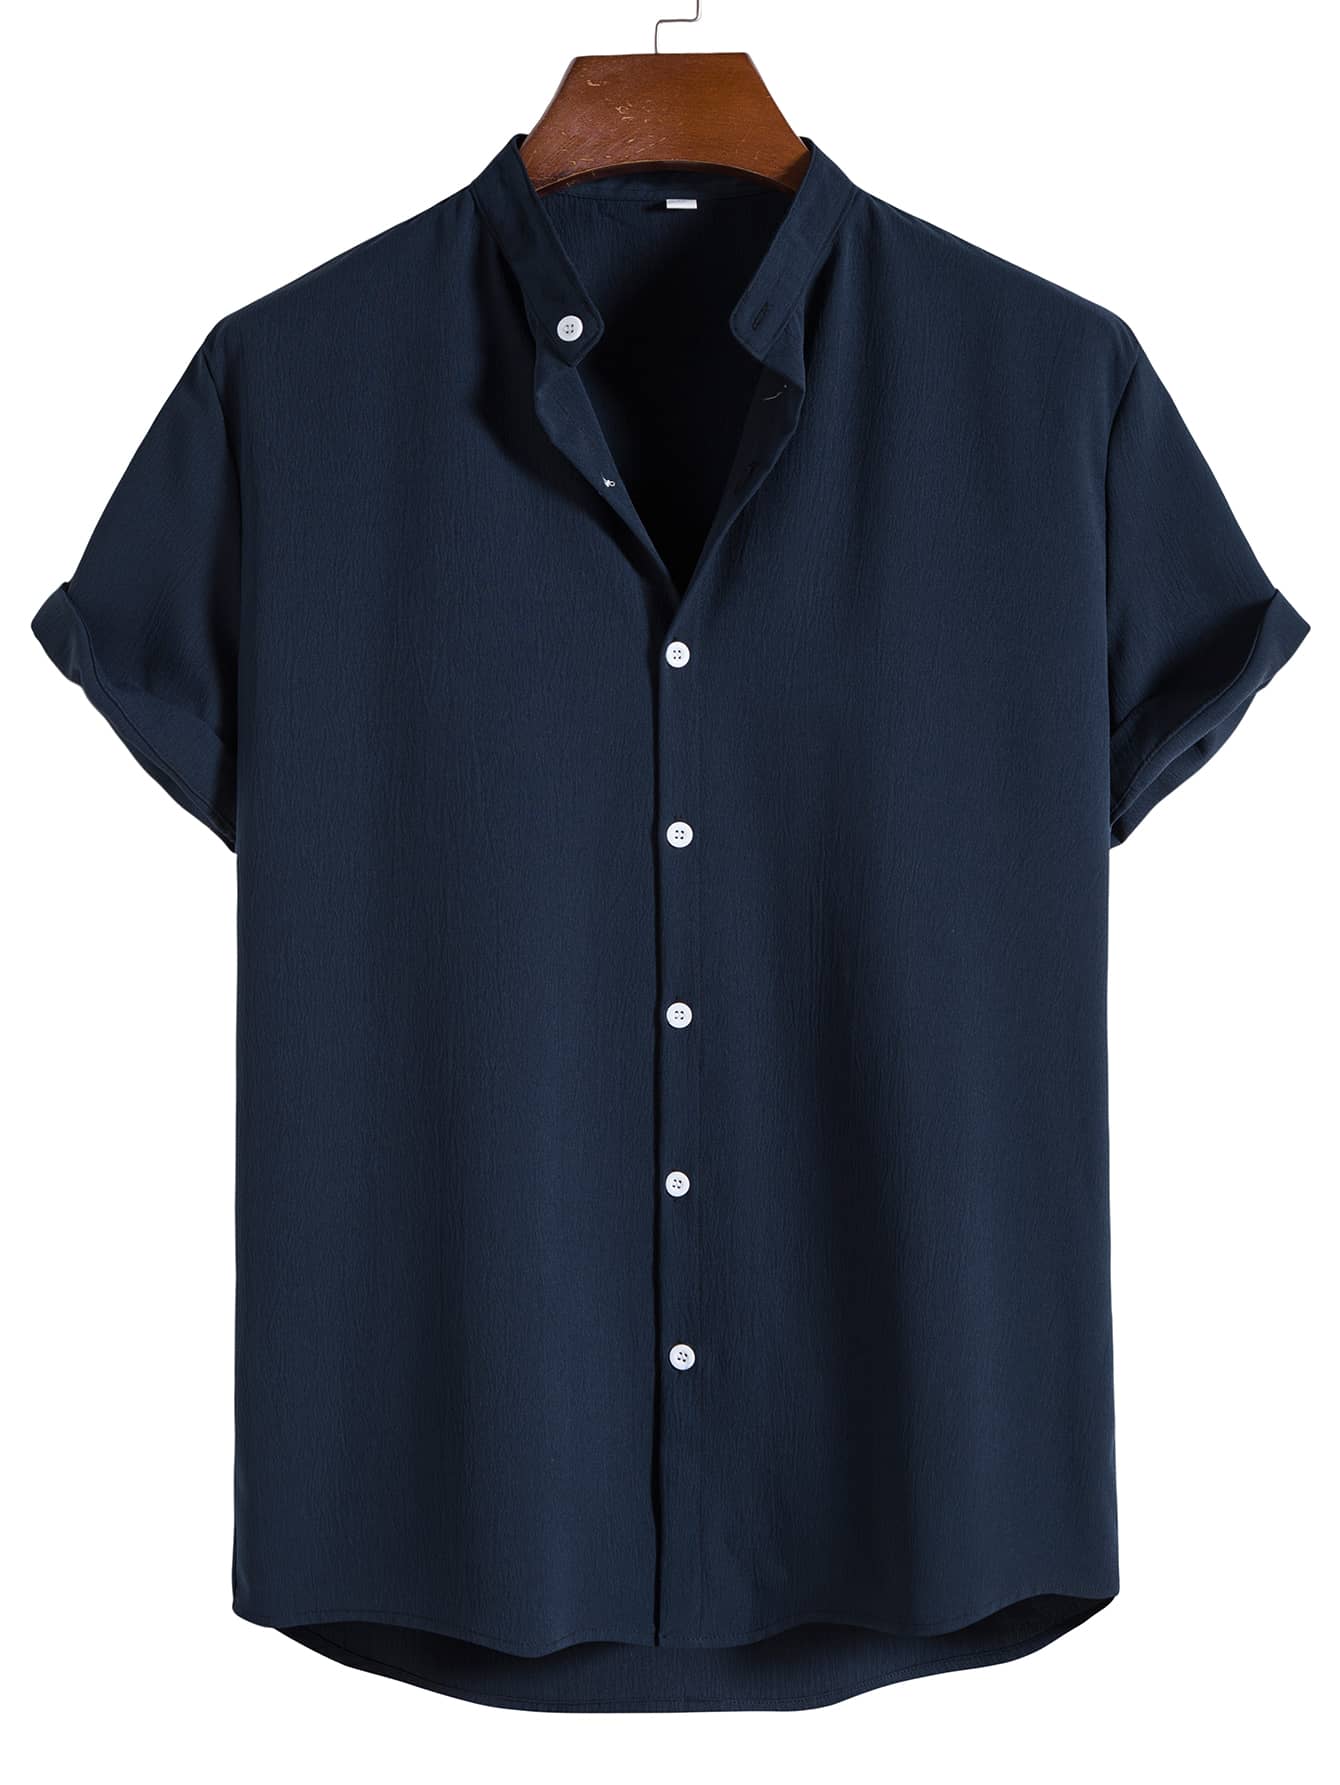 Мужская текстурированная рубашка с коротким рукавом Manfinity Homme на пуговицах спереди, темно-синий фото